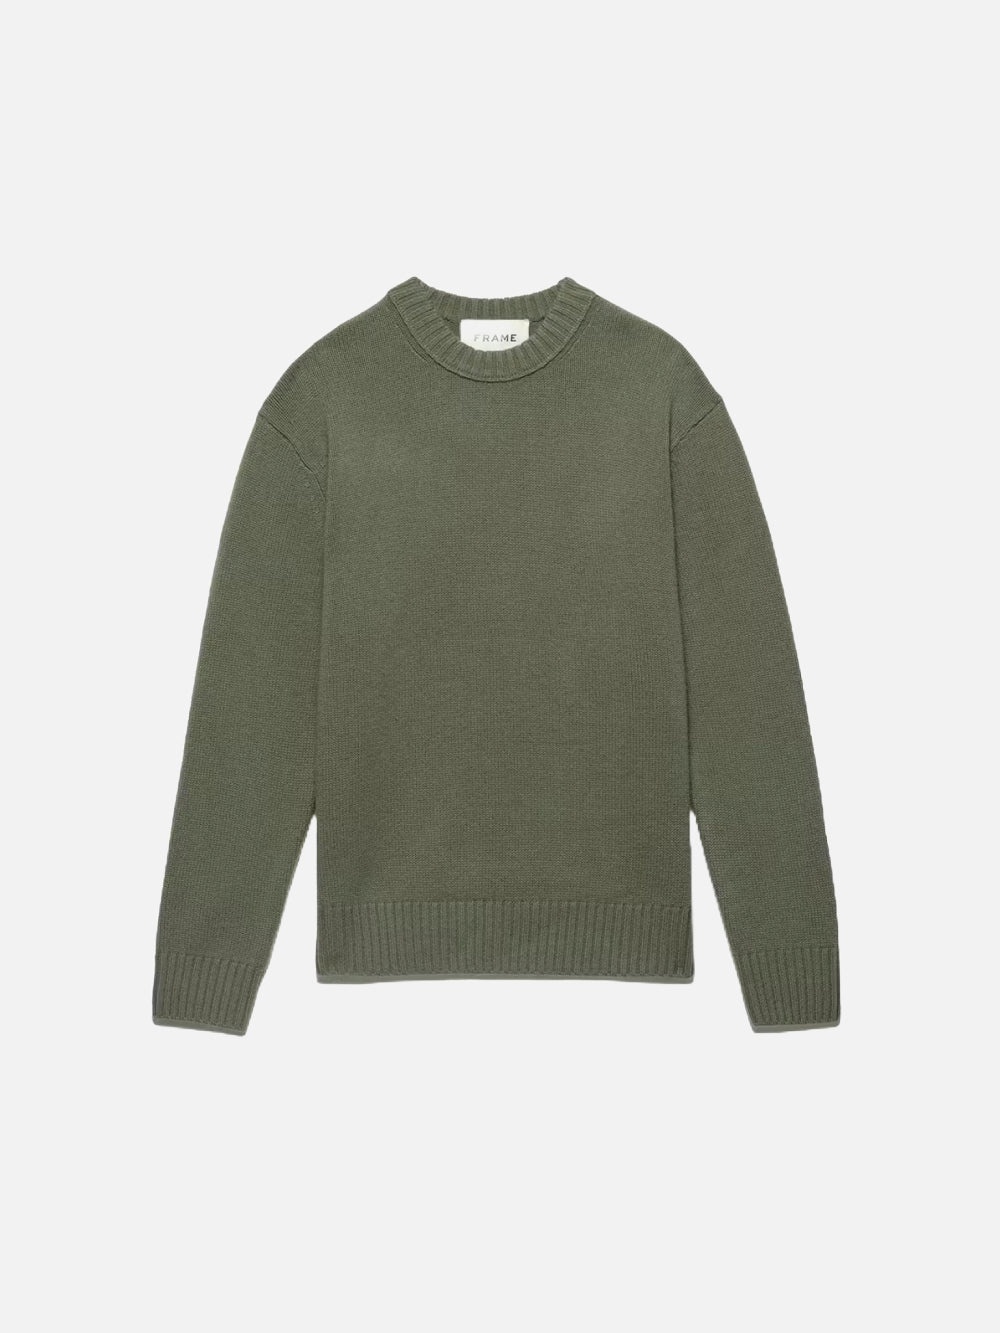 Cashmere Crewneck Sweater in Khaki Green - 1